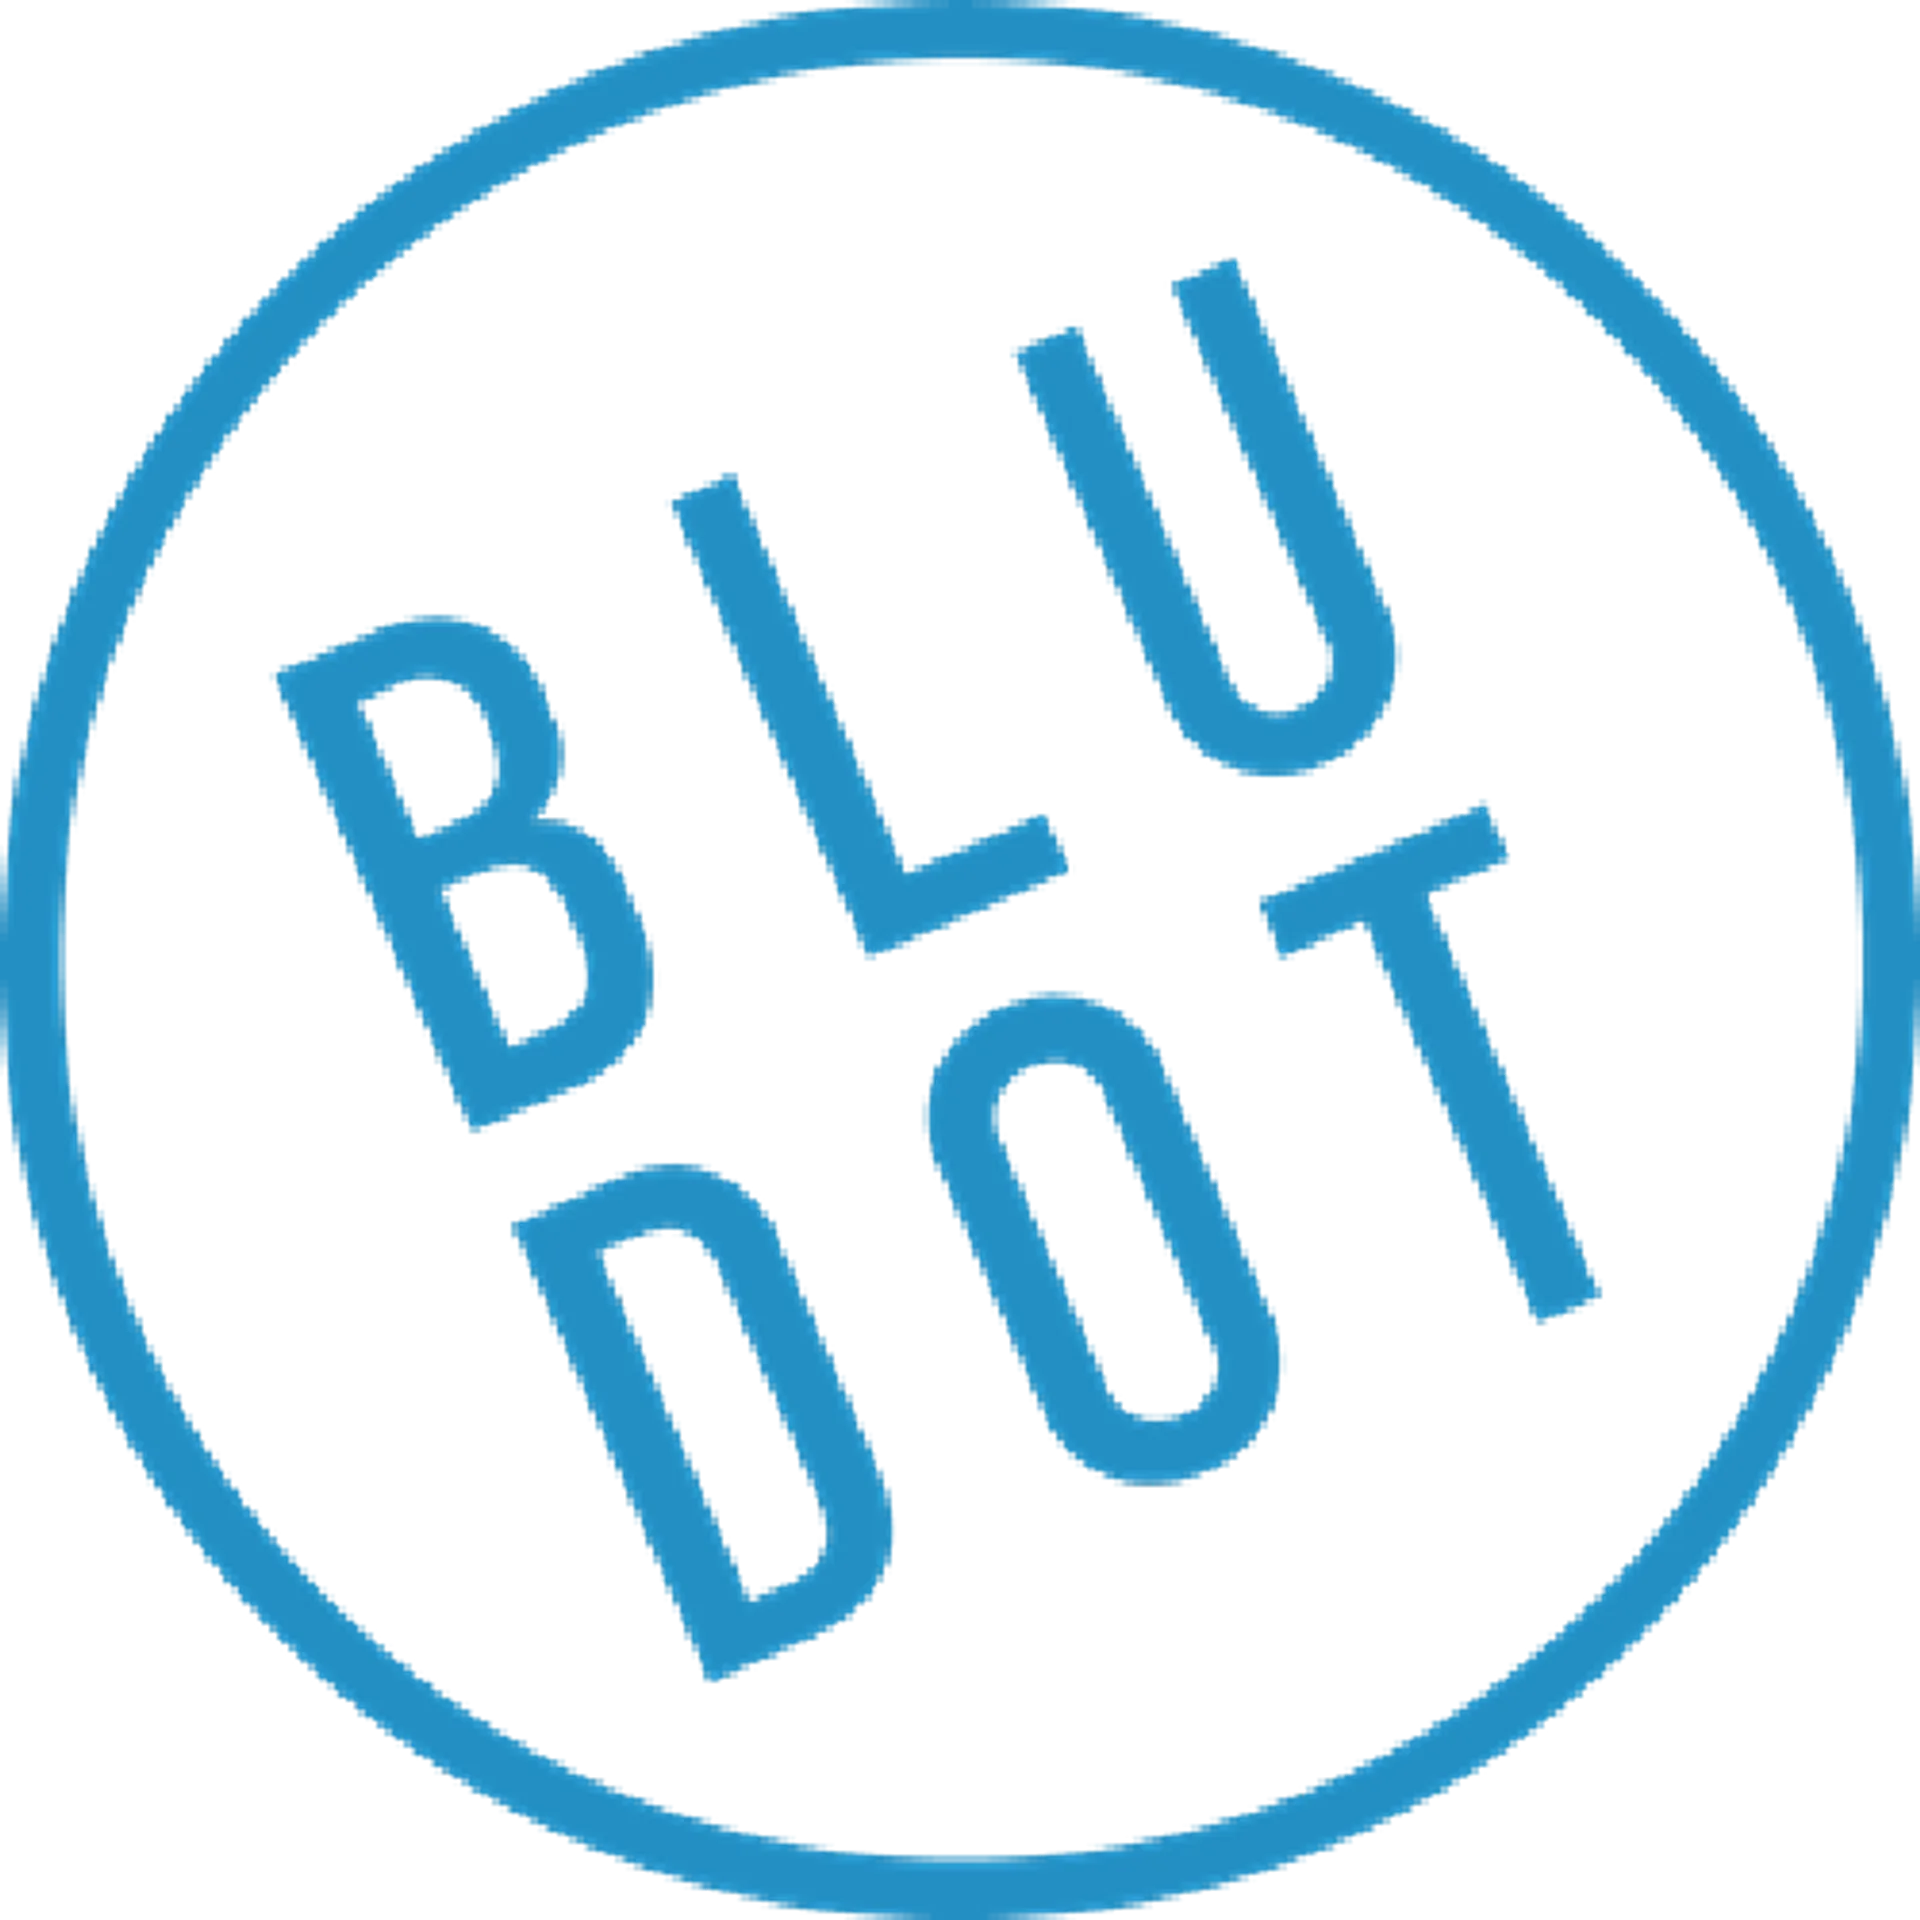 BLU DOT logo of current catalogue